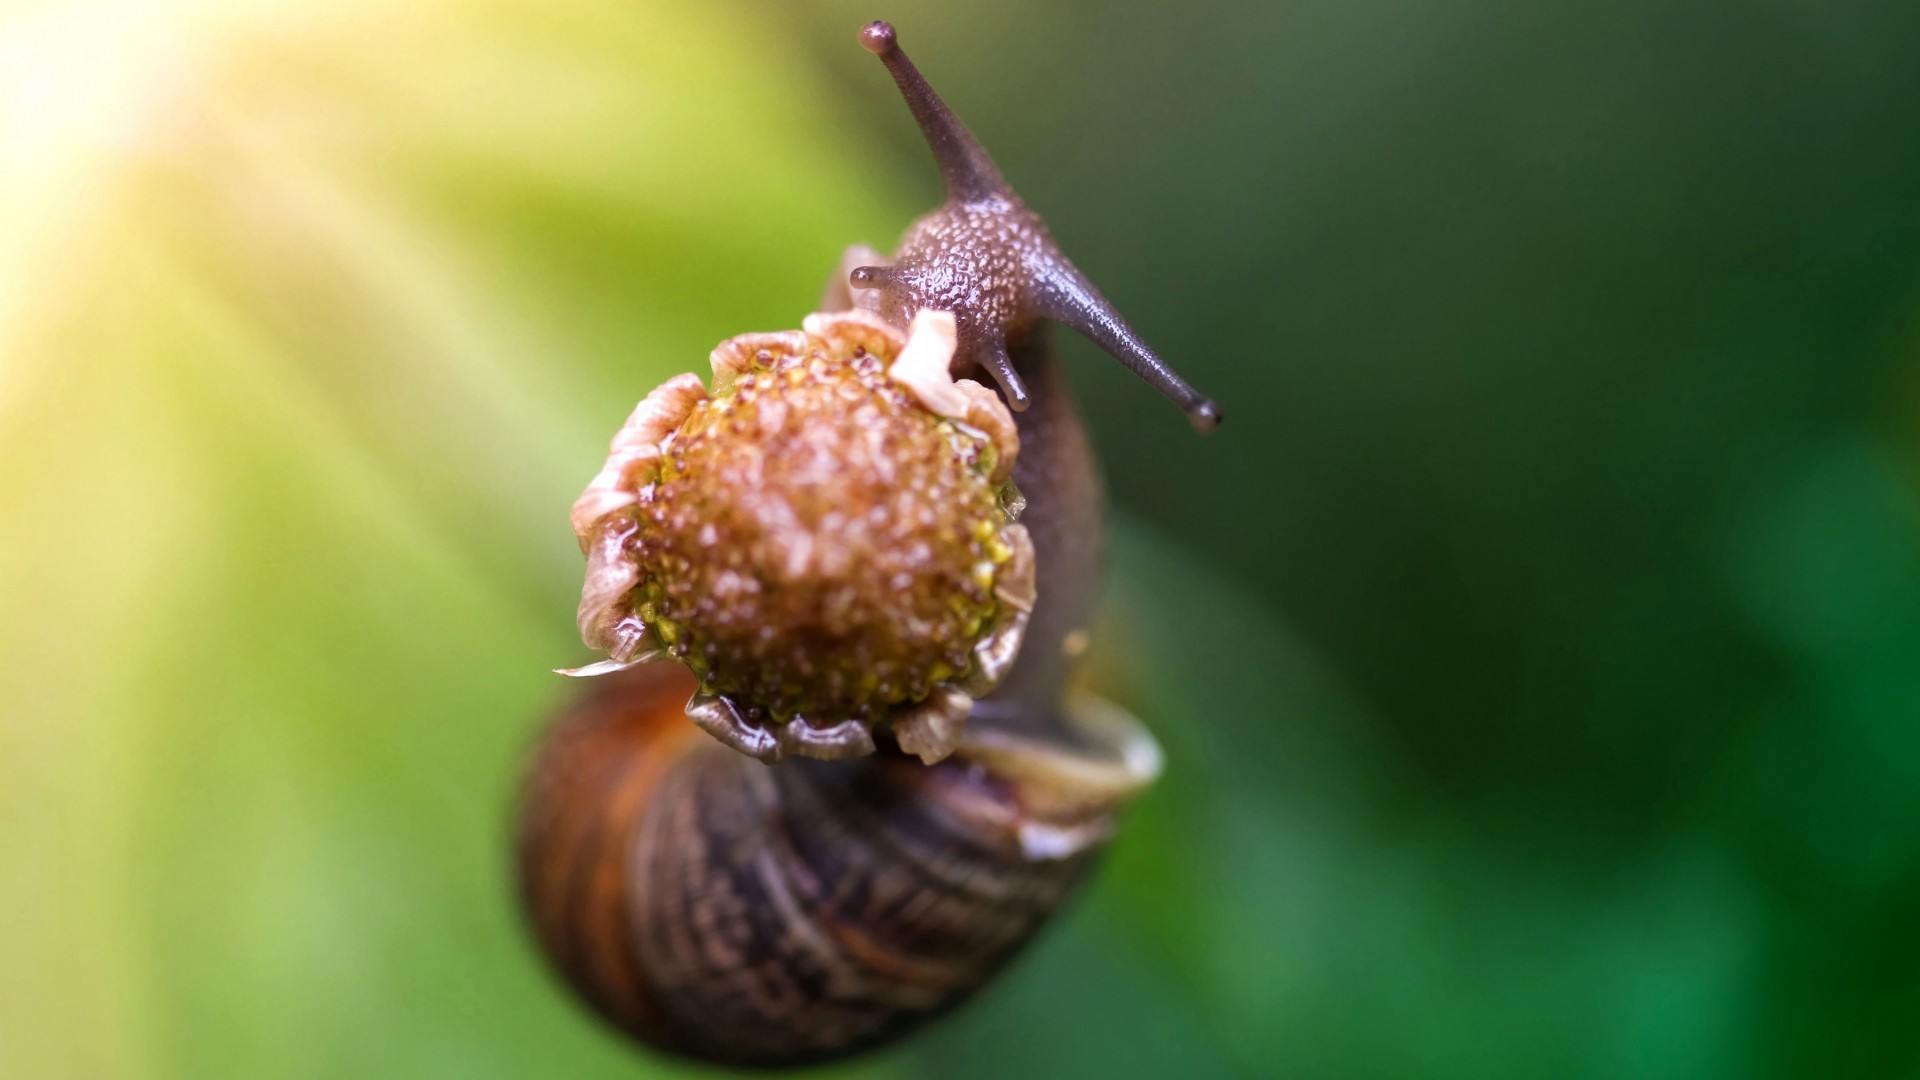 улитка, ест цветок, зеленый фон, природа, snail, eating flower, green background, nature (horizontal)